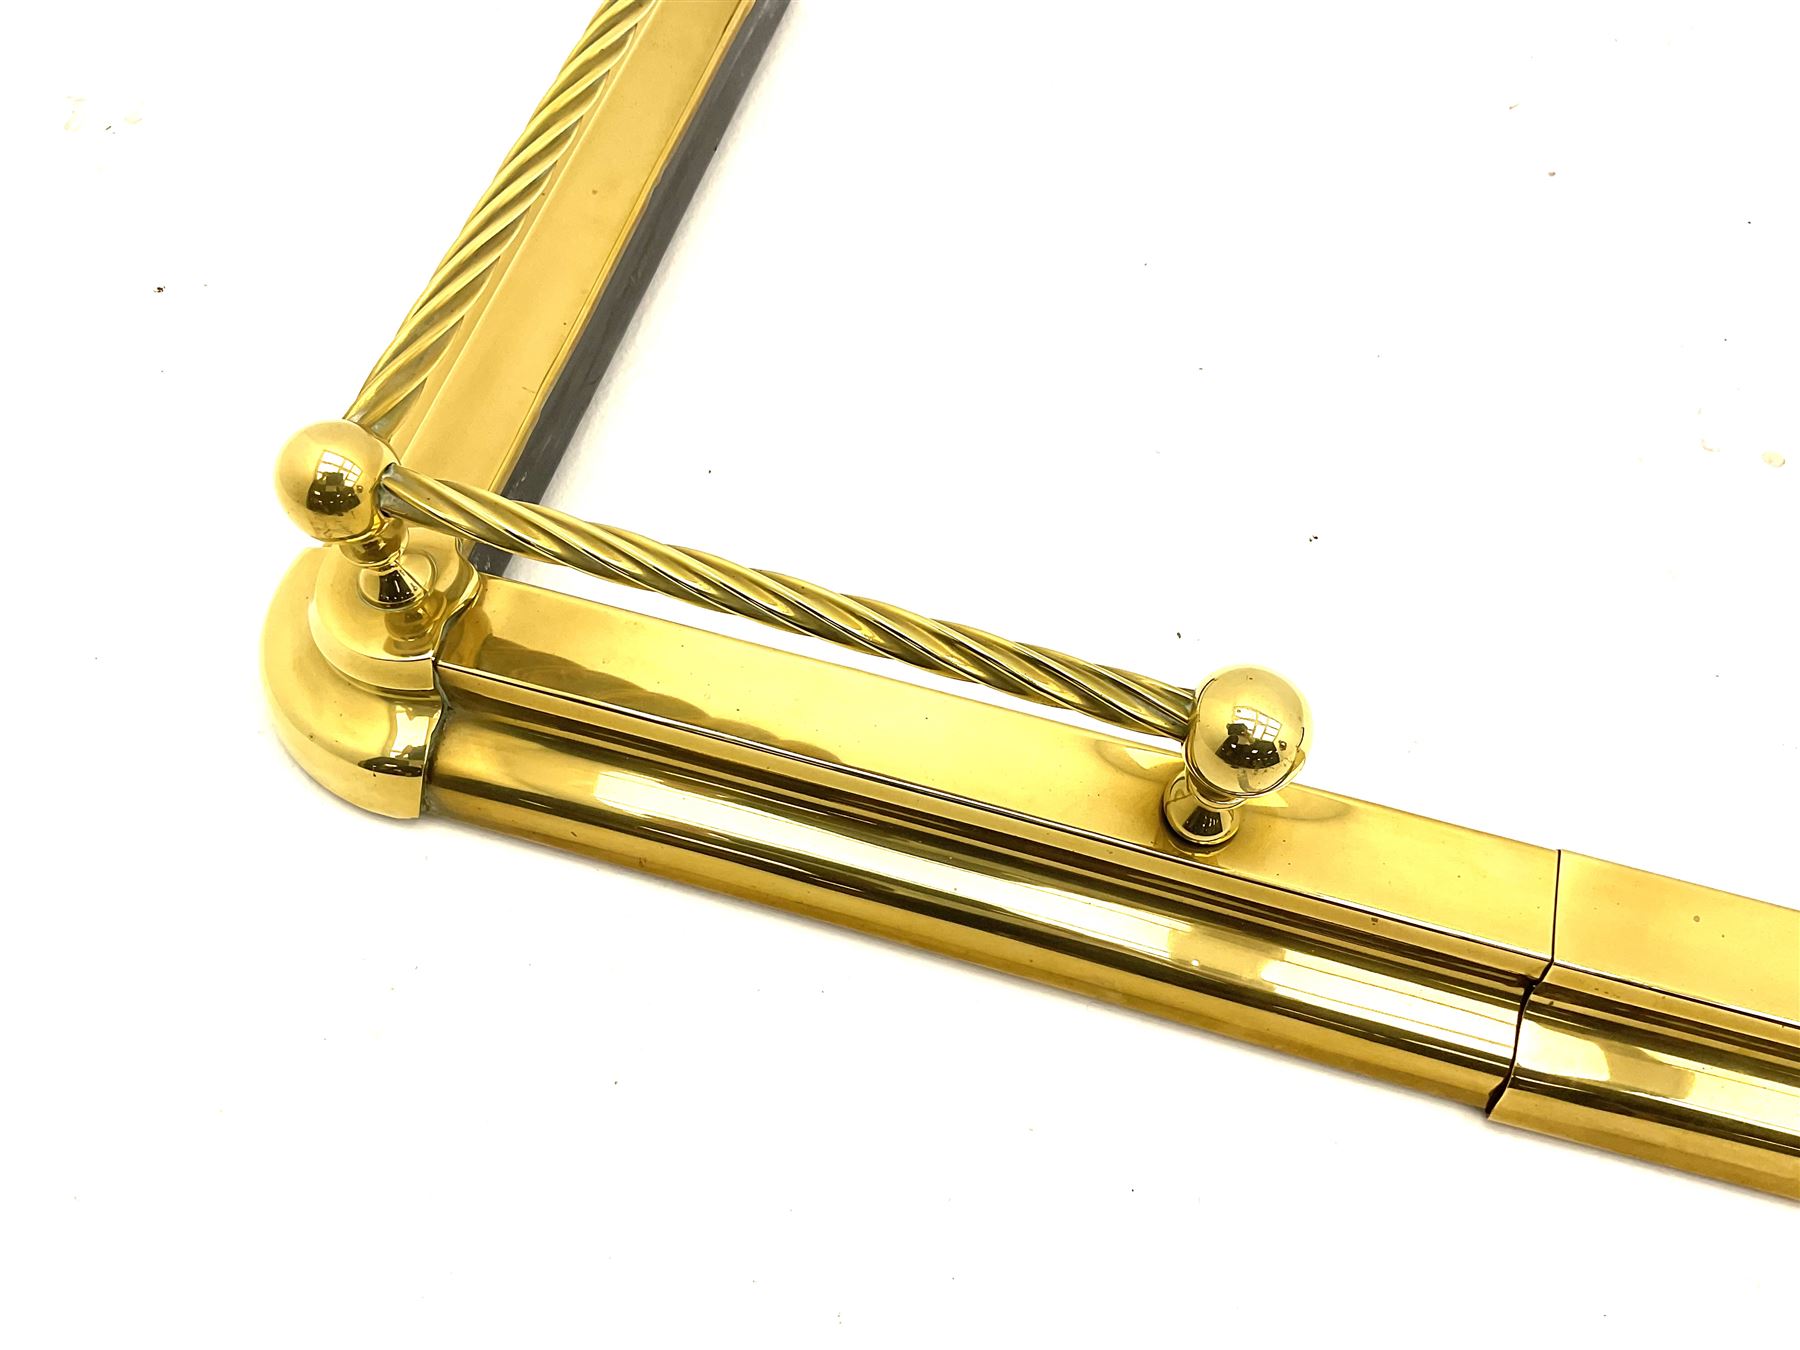 20th century brass telescopic fender - Image 2 of 2